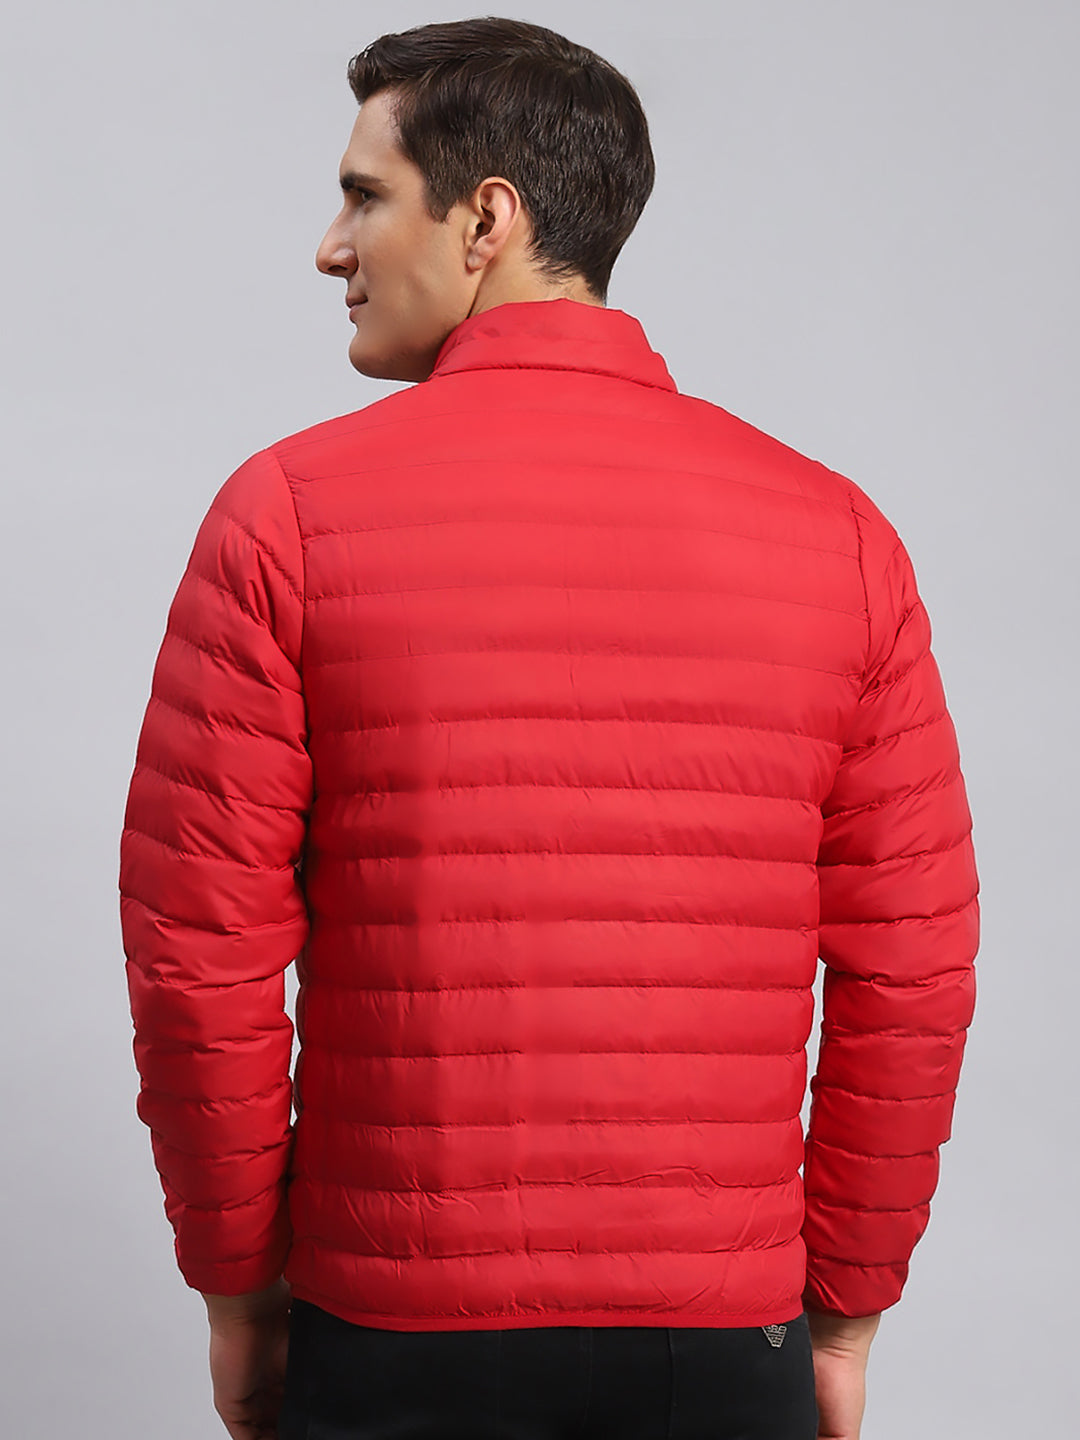 Kosha Red Plus Size Puffer Jacket | Men